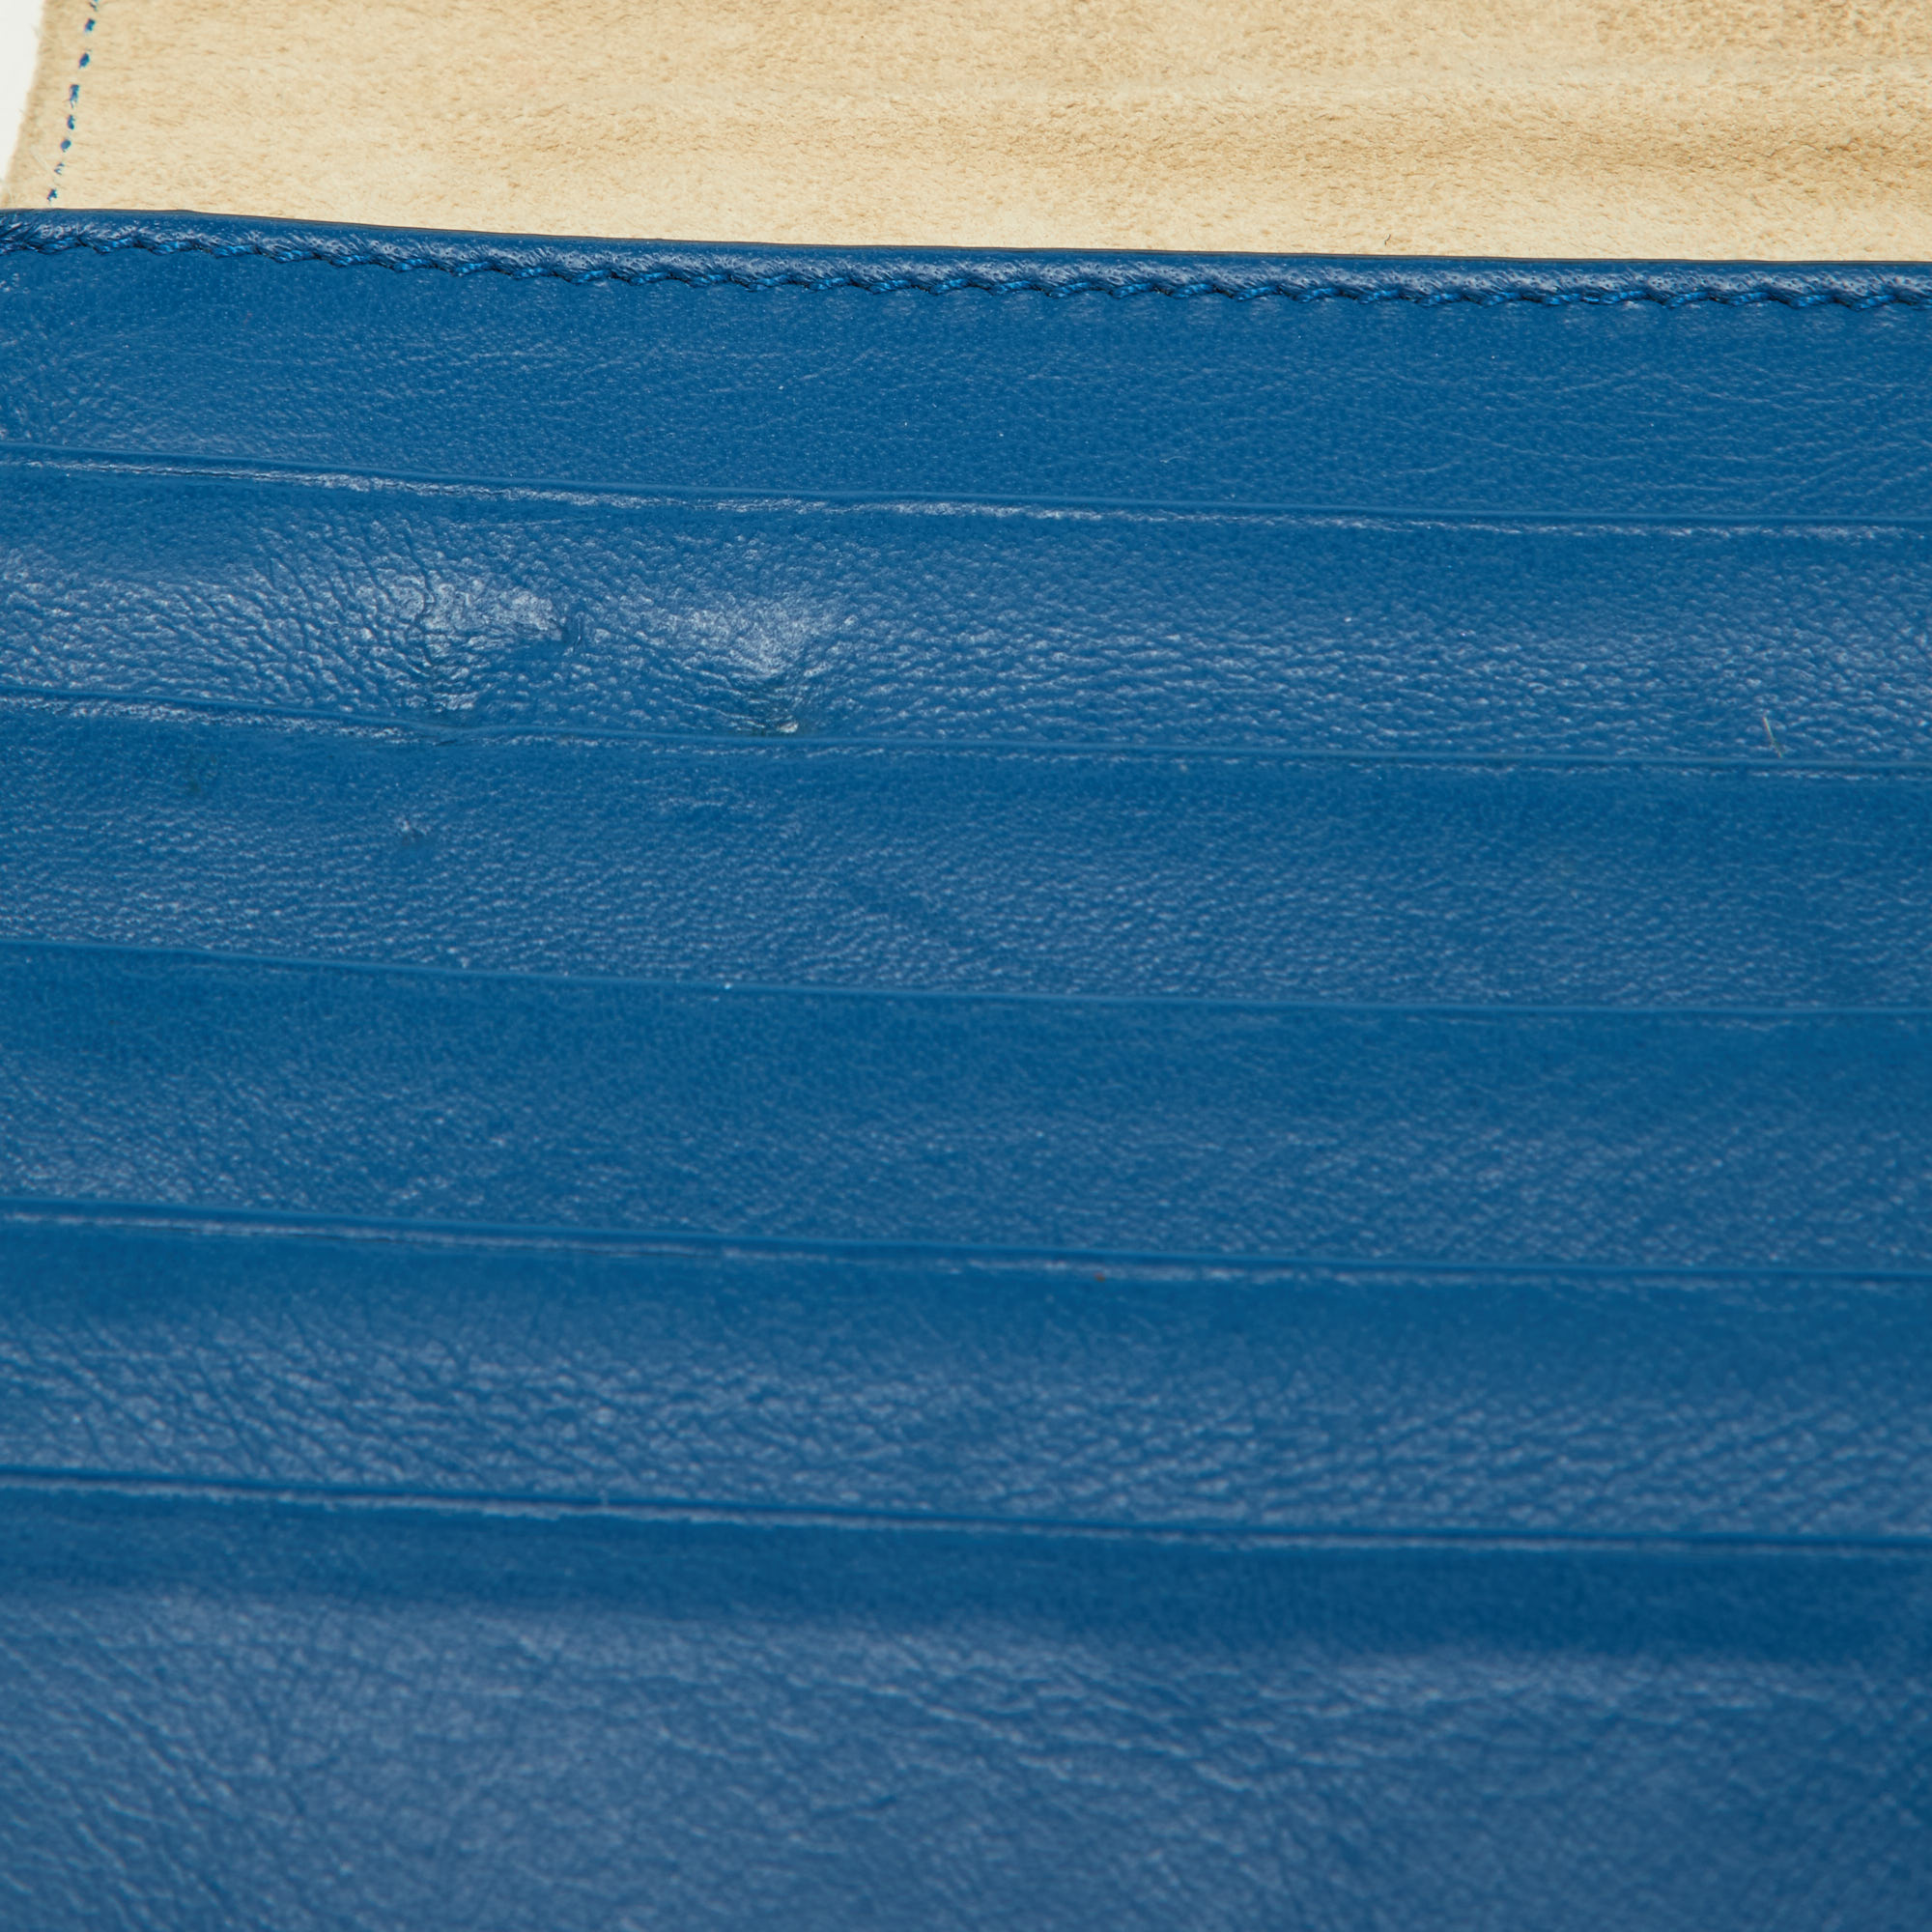 Celine Blue/Cream Leather Large Multifunction Strap Wallet